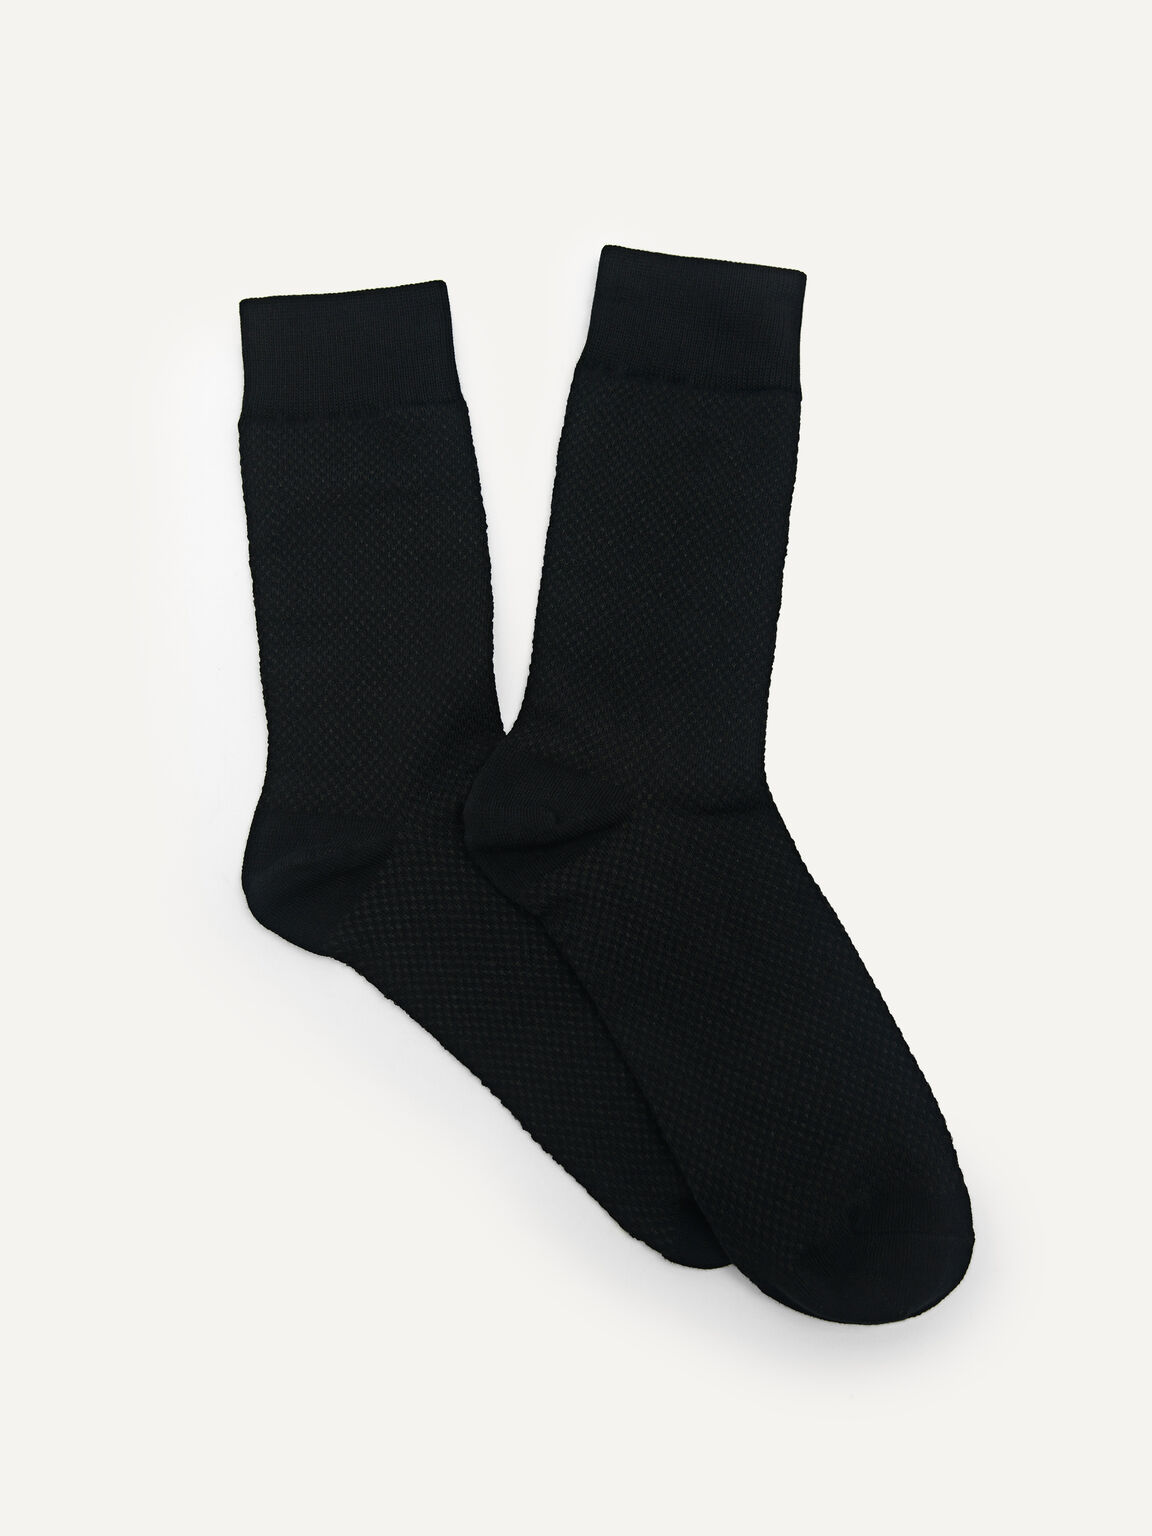 Men's Textured Cotton Socks, Black, hi-res